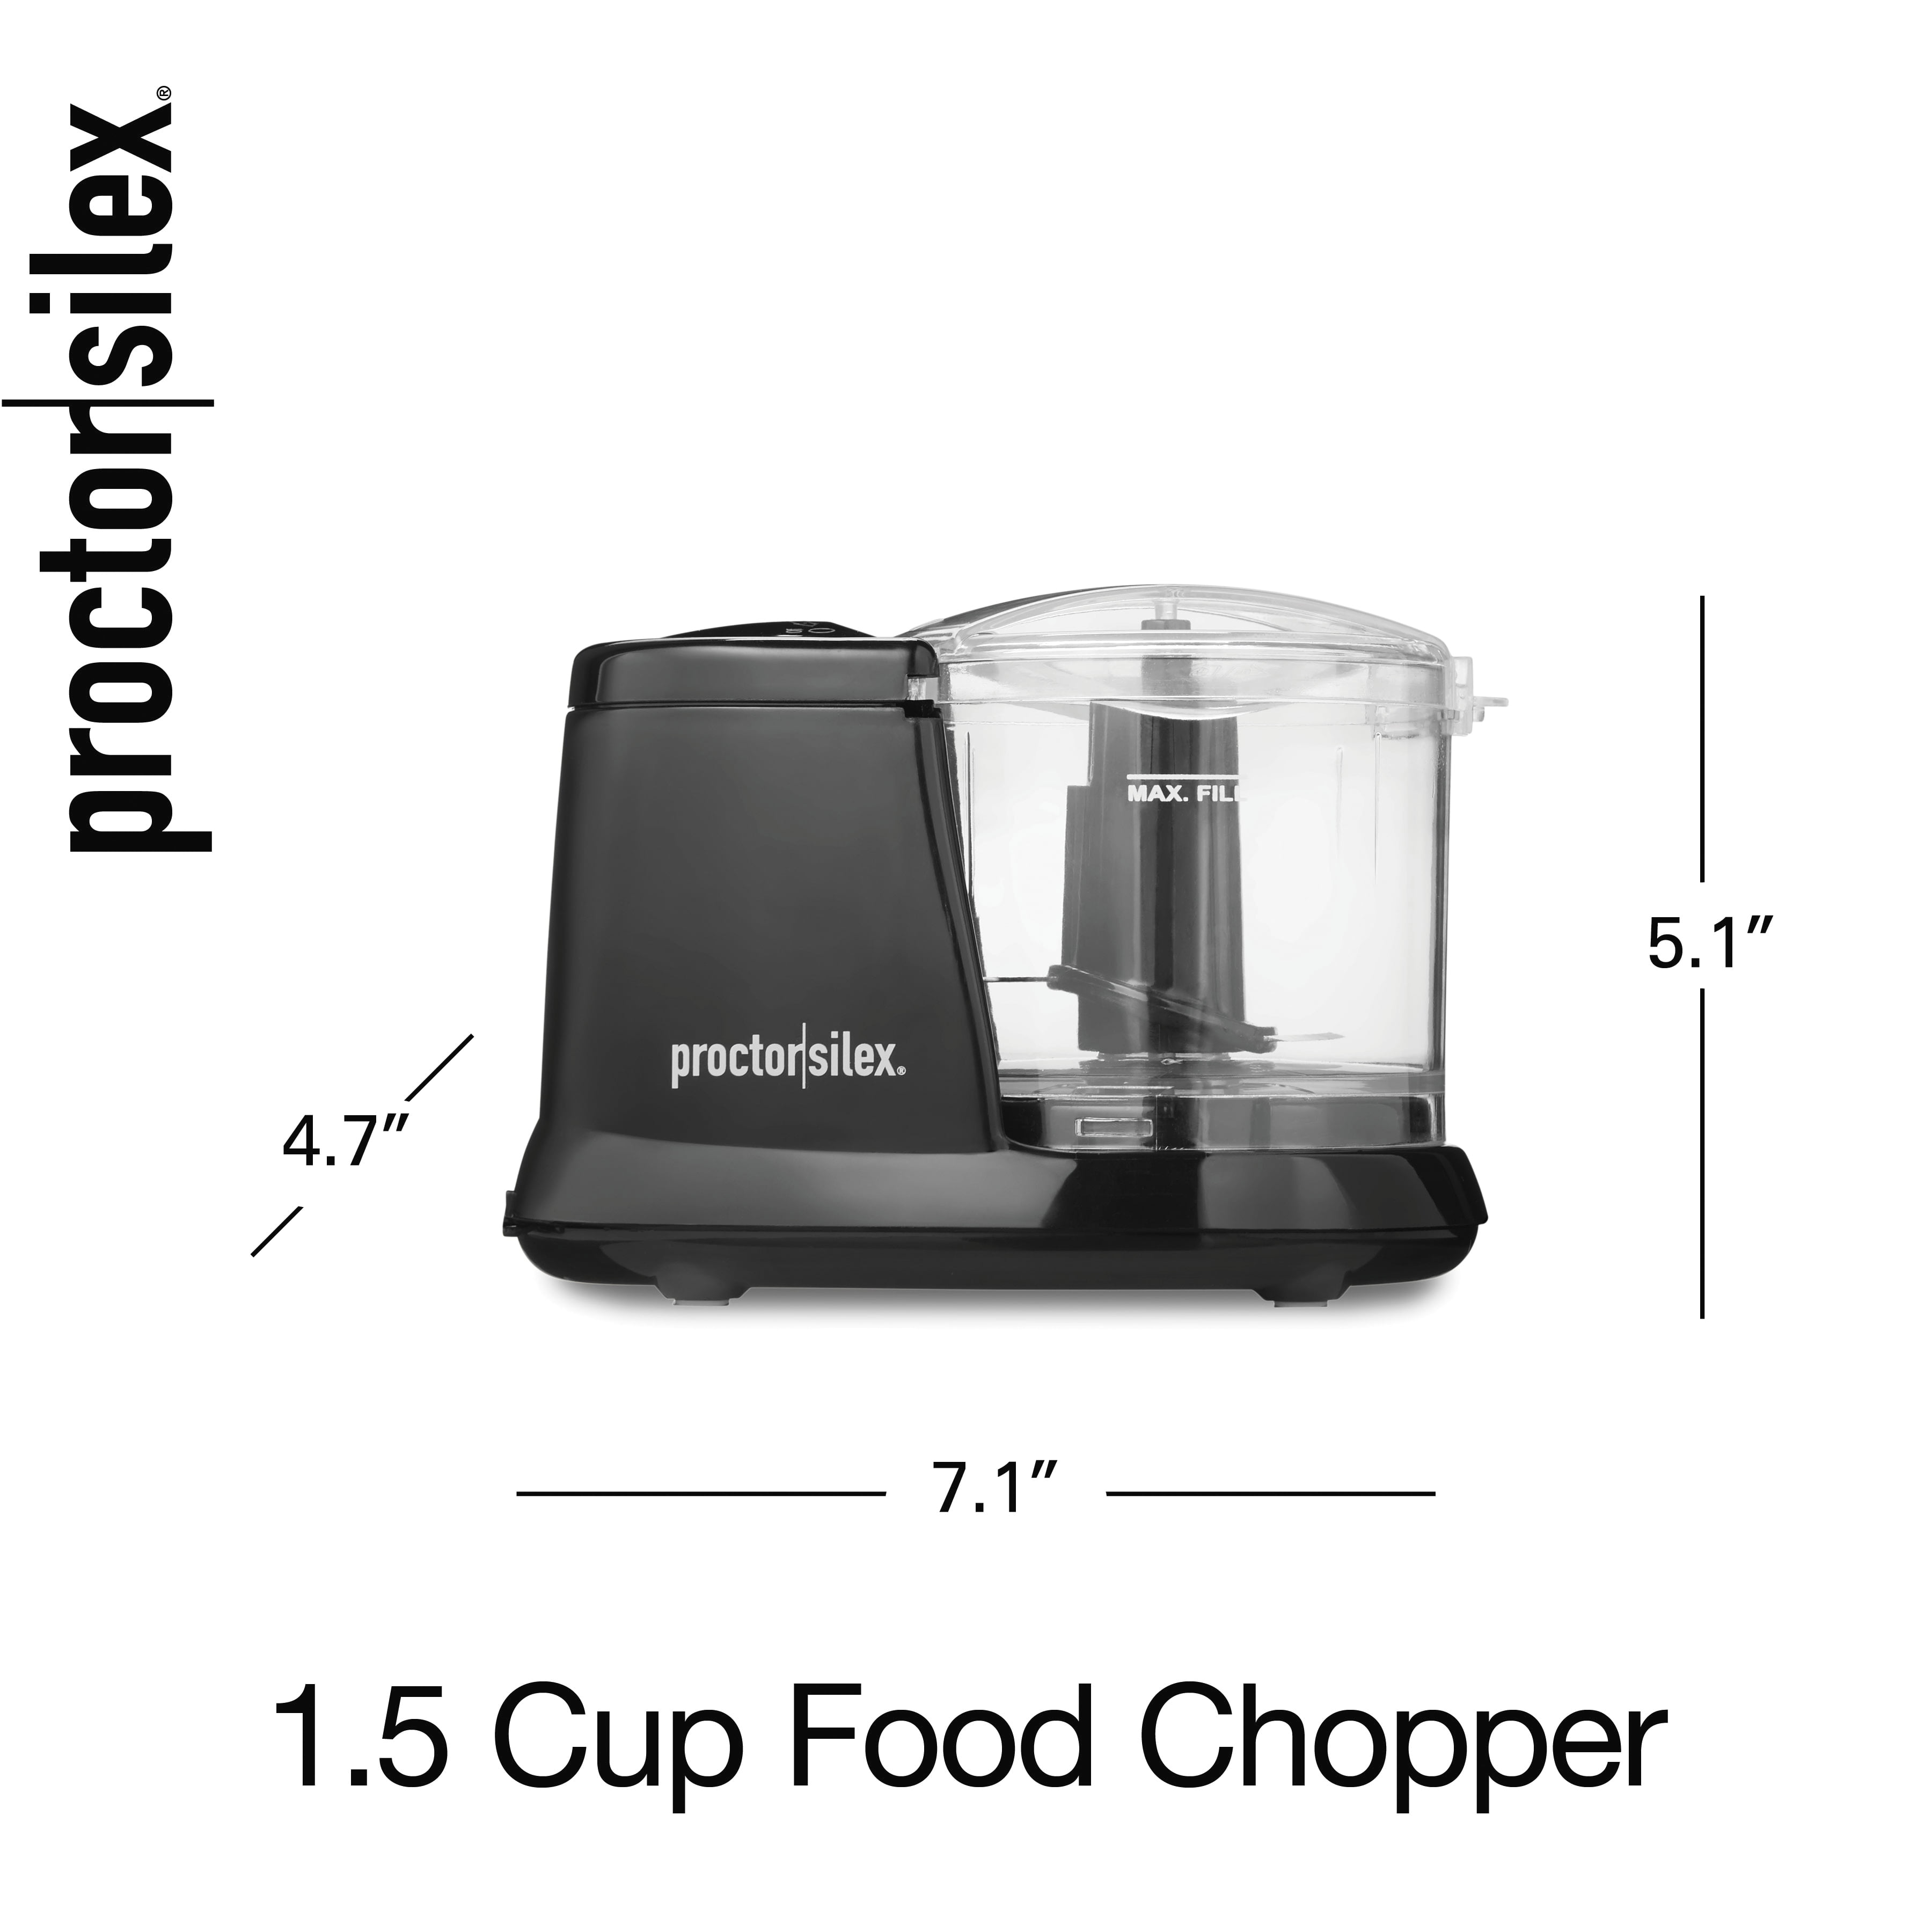 QuickPrep Electric Food Chopper - 1.5 Cup 